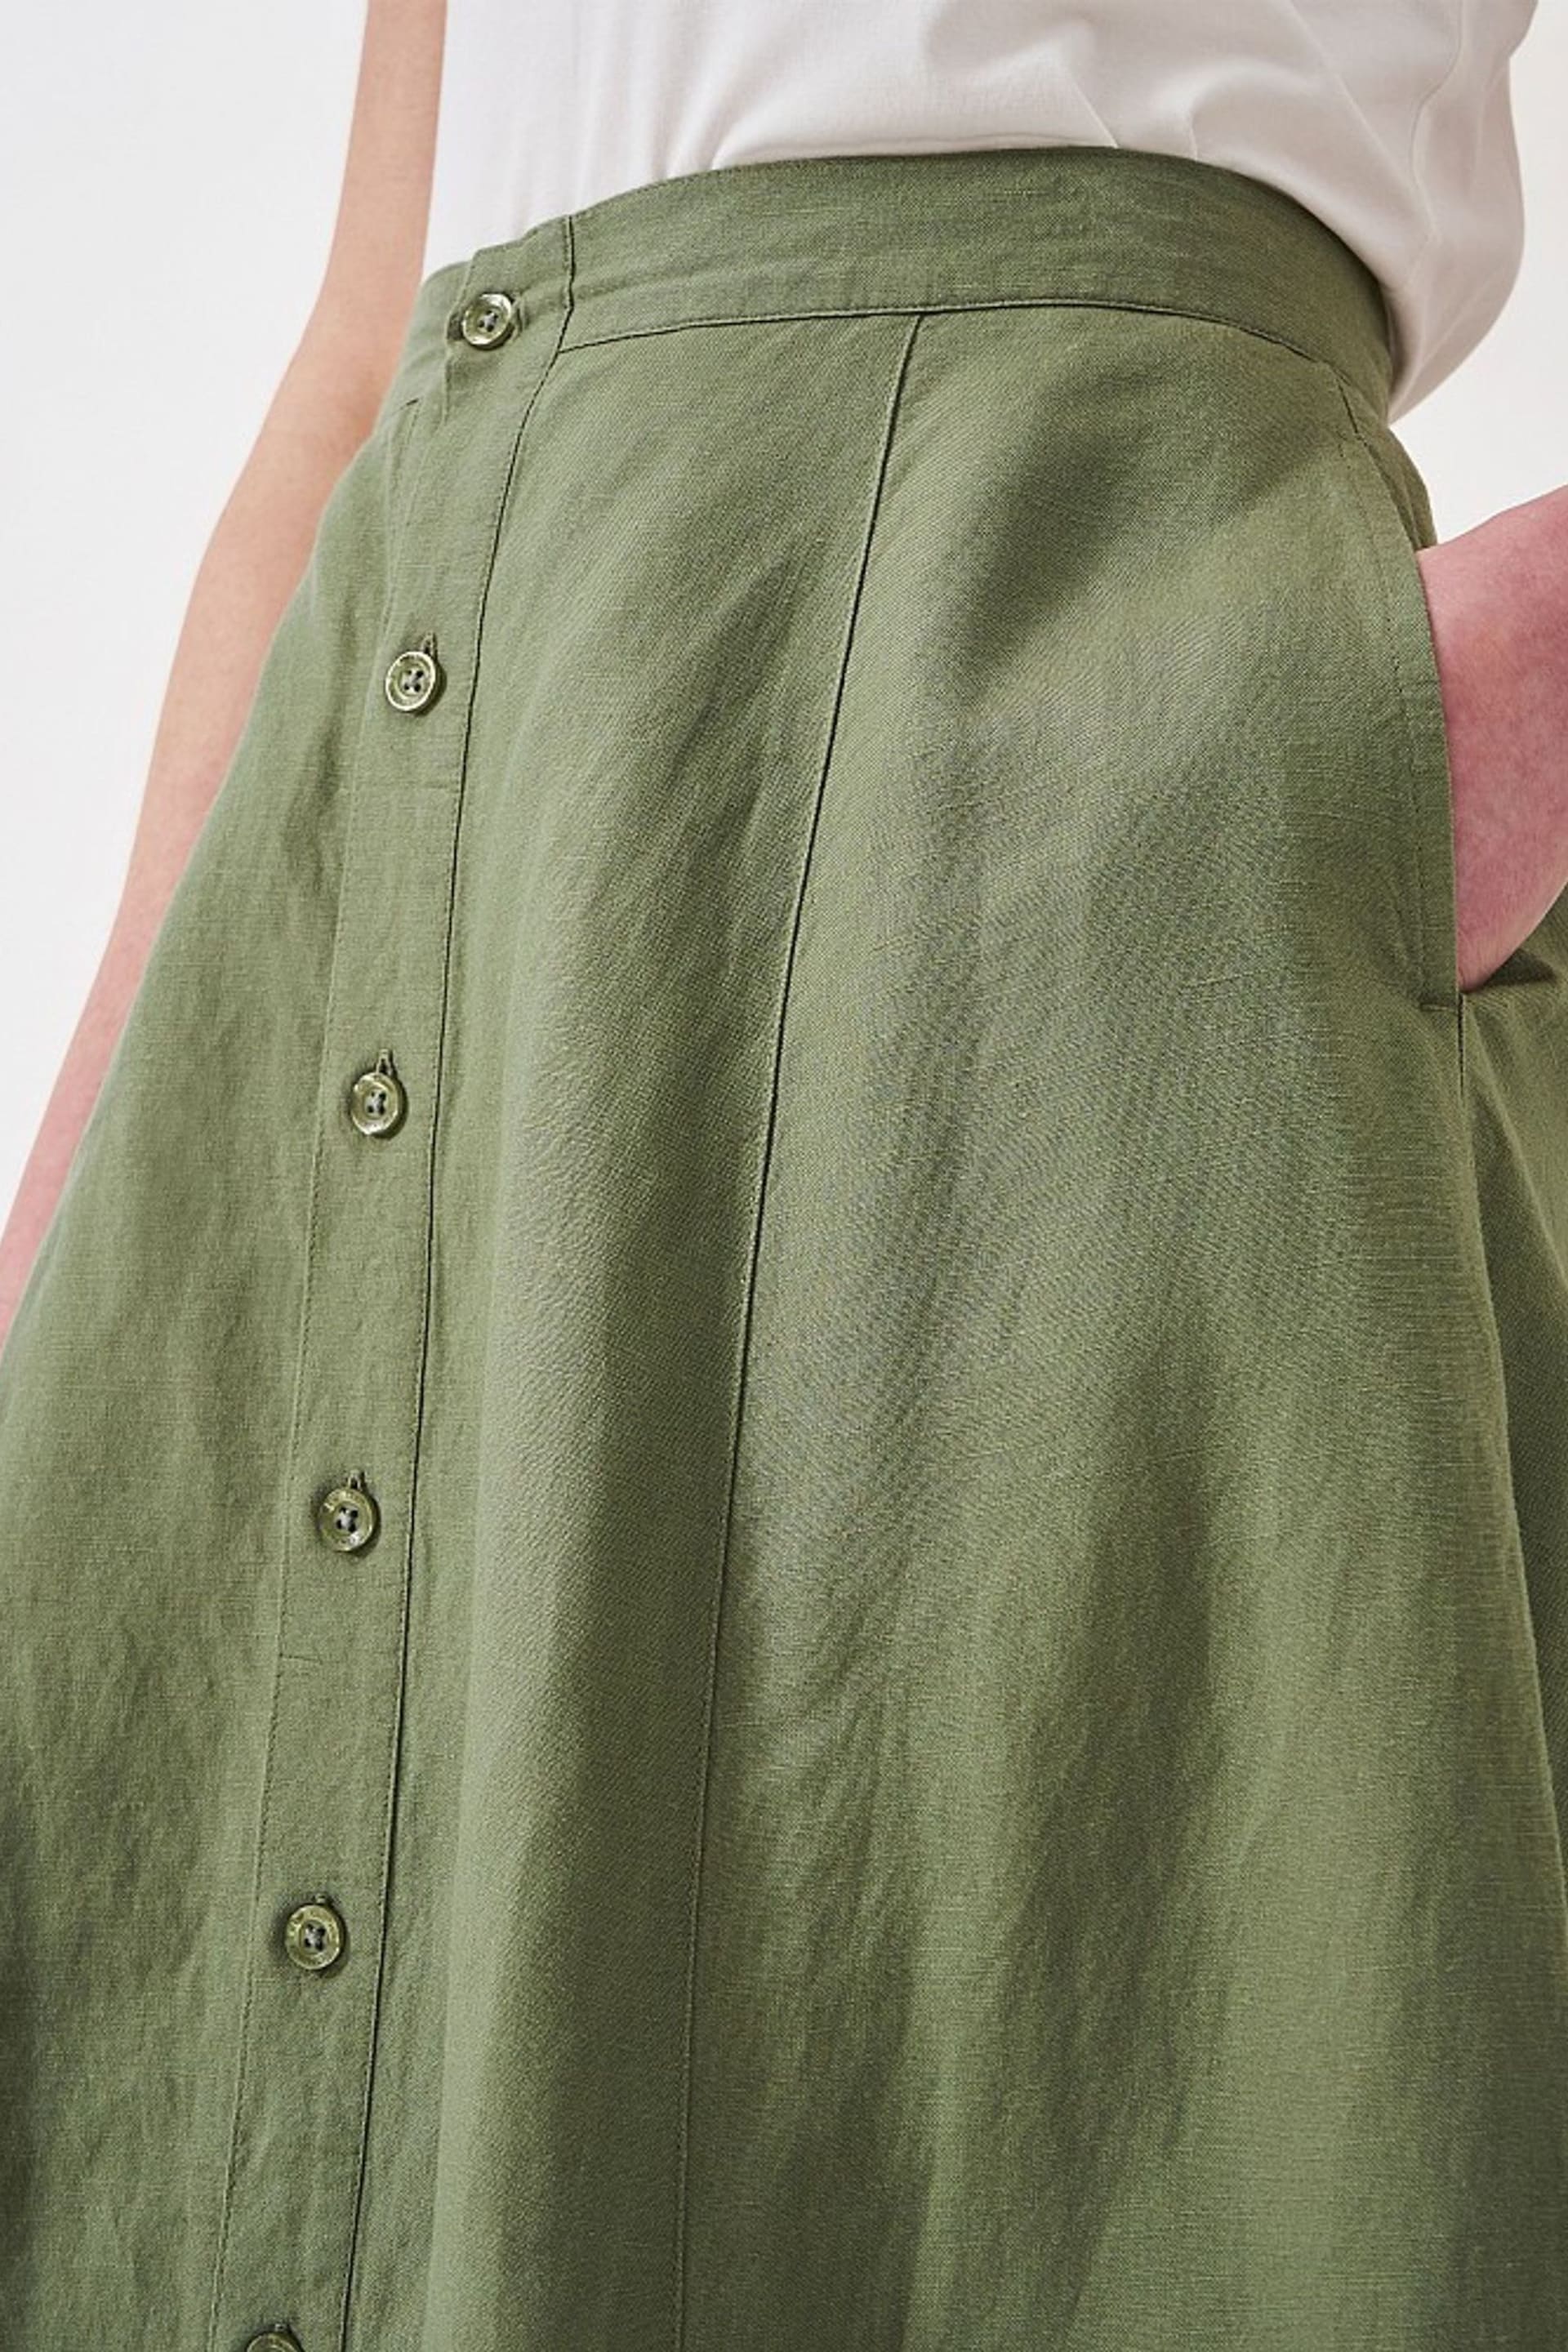 Crew Clothing Linen Blend Button Through Skirt - Image 4 of 5